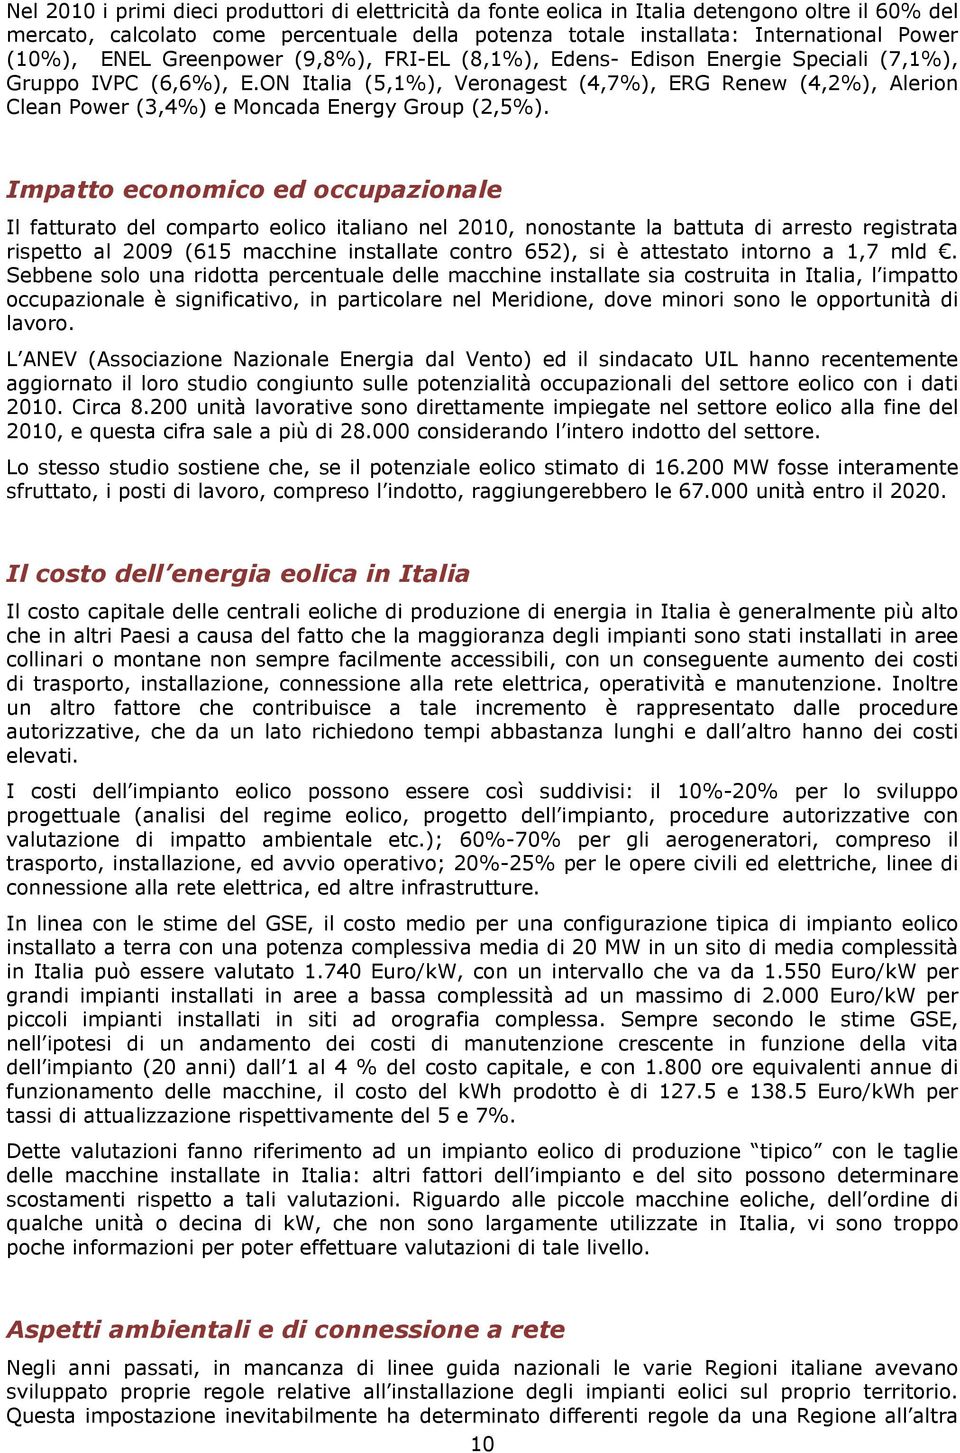 ON Italia (5,1%), Veronagest (4,7%), ERG Renew (4,2%), Alerion Clean Power (3,4%) e Moncada Energy Group (2,5%).